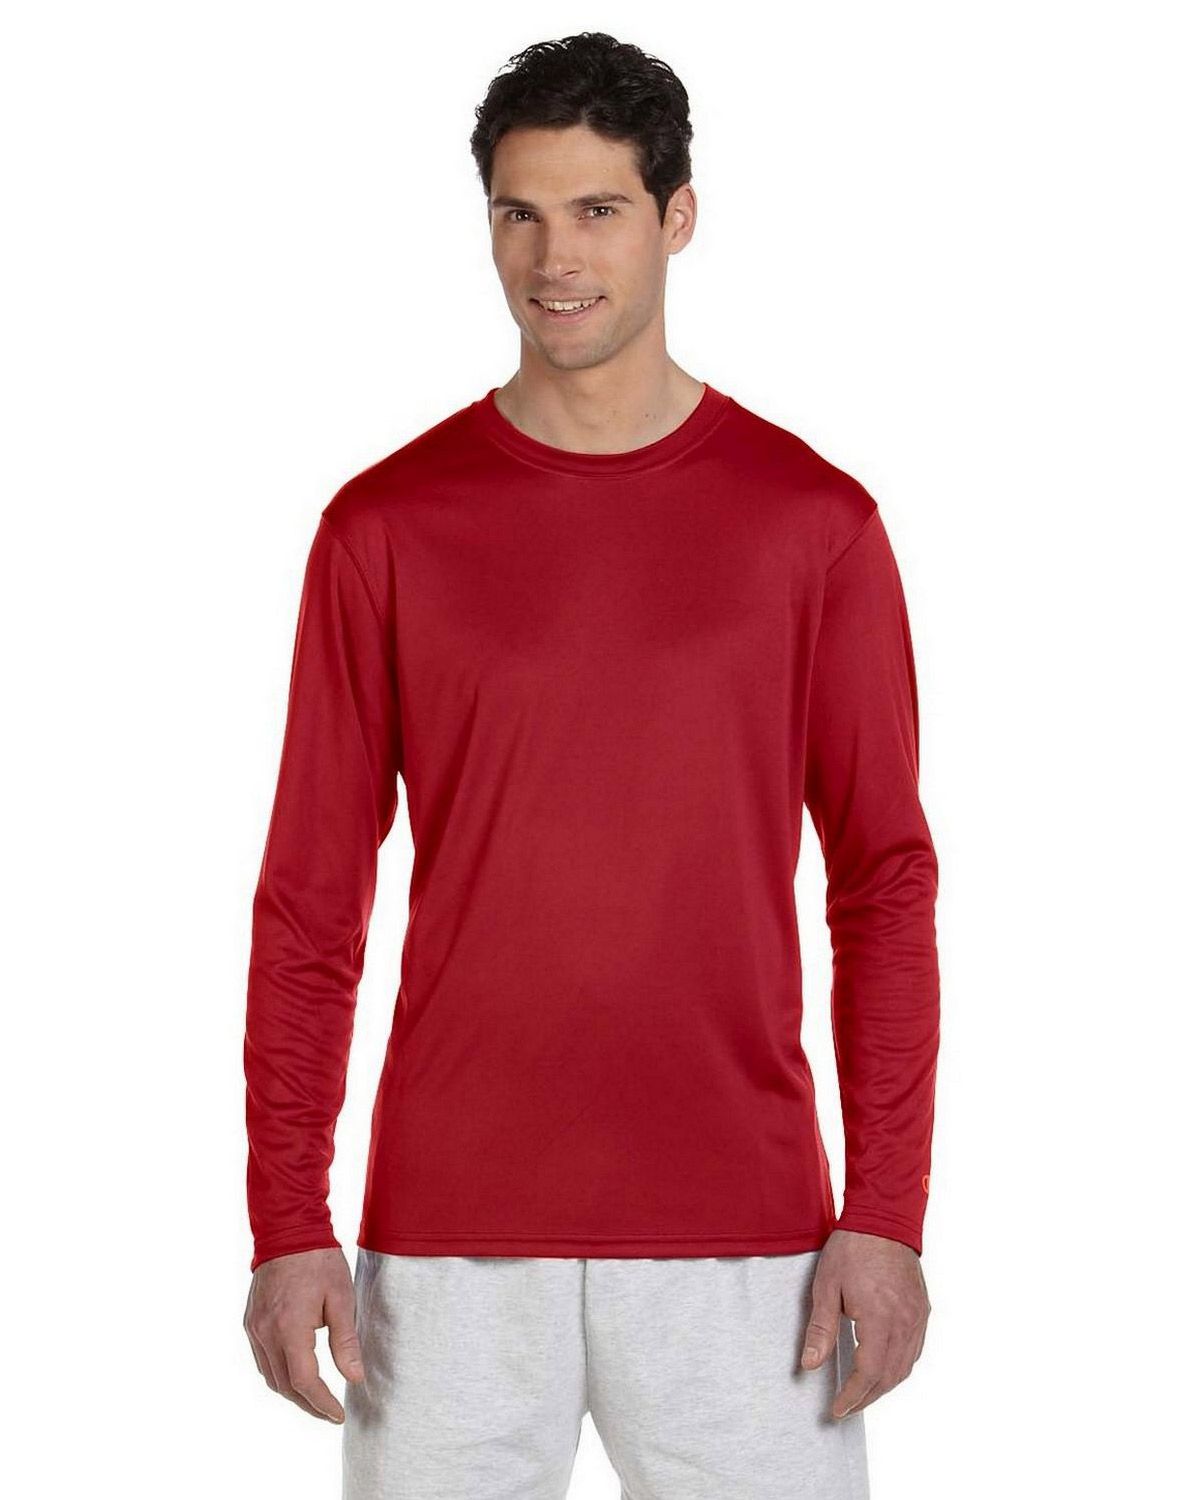 long sleeve champion shirt red